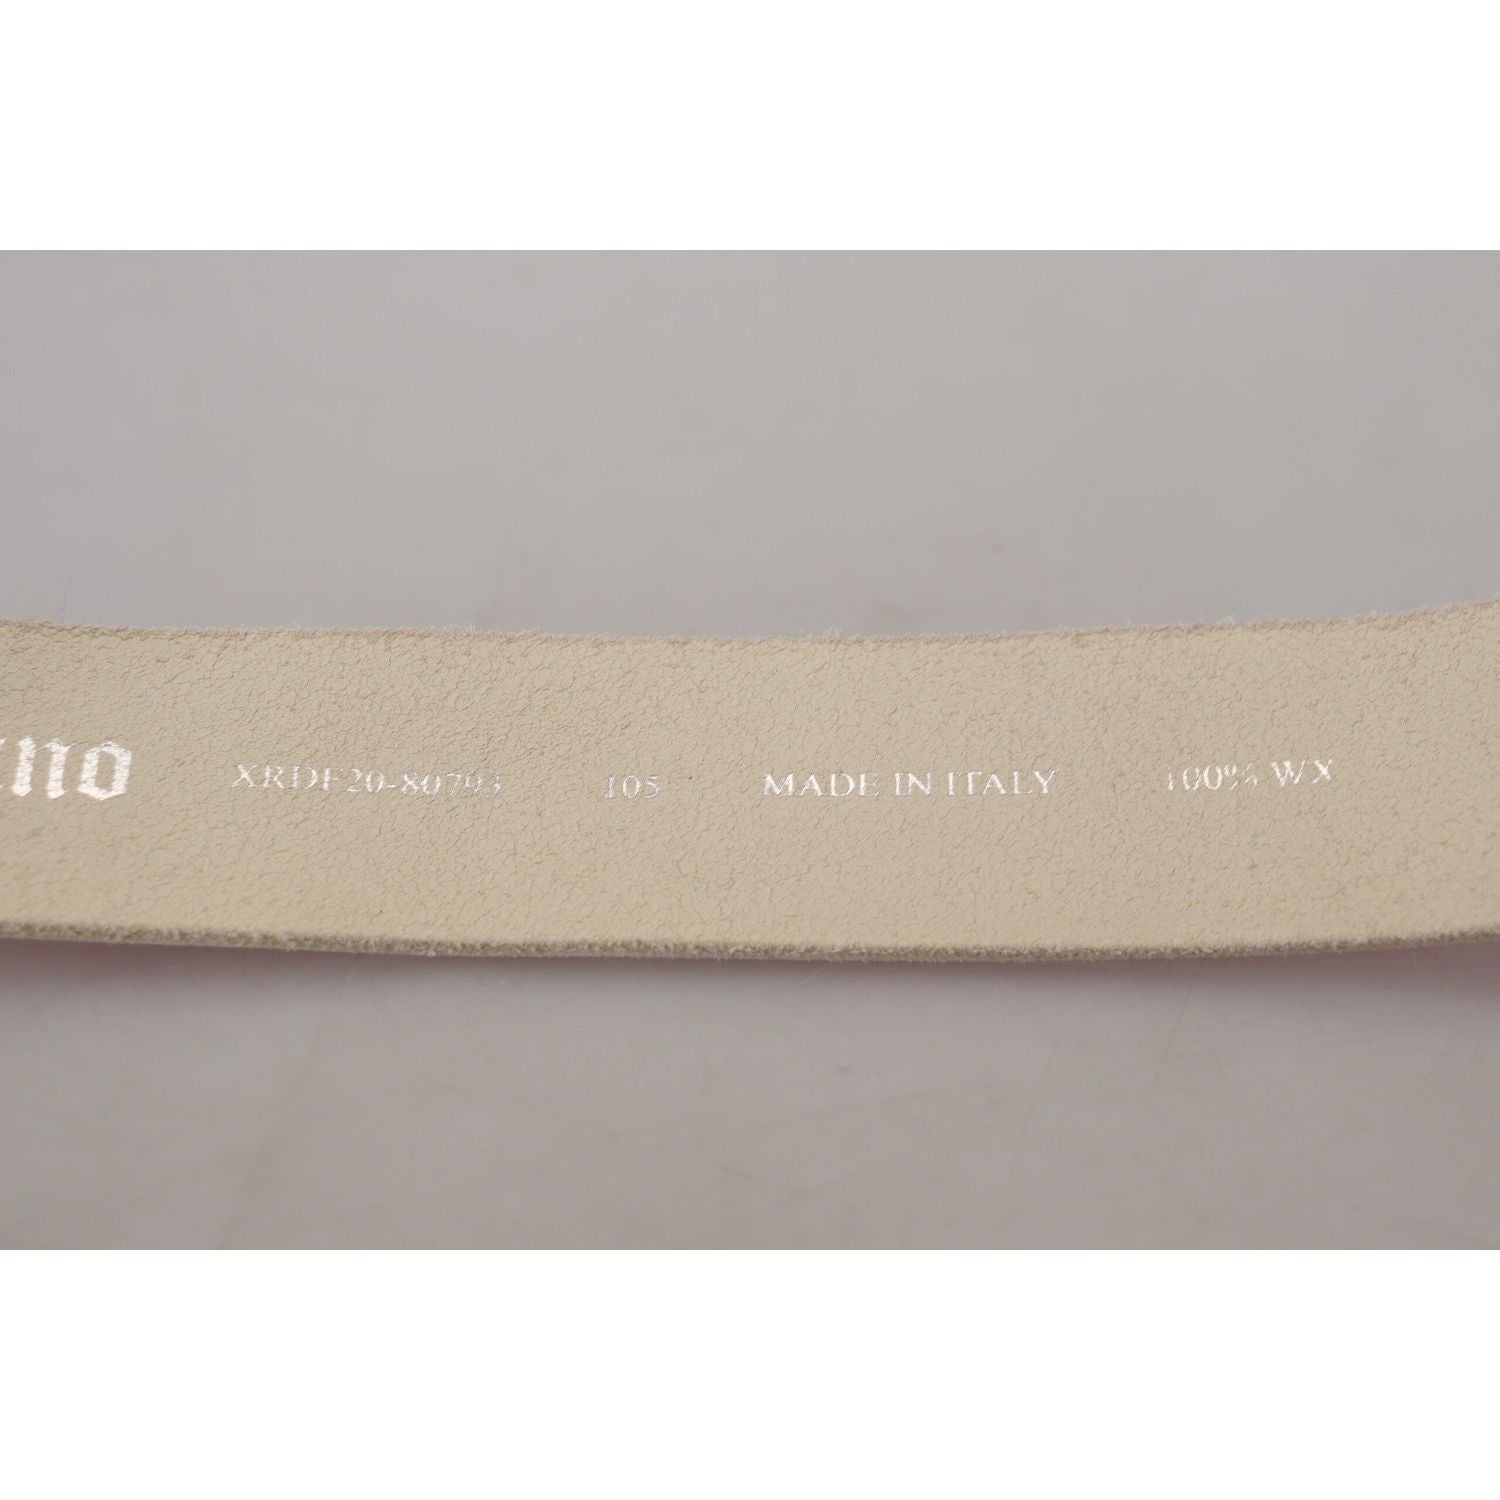 John Galliano | Pink Leather Letter Logo Round Buckle Waist Belt - McRichard Designer Brands